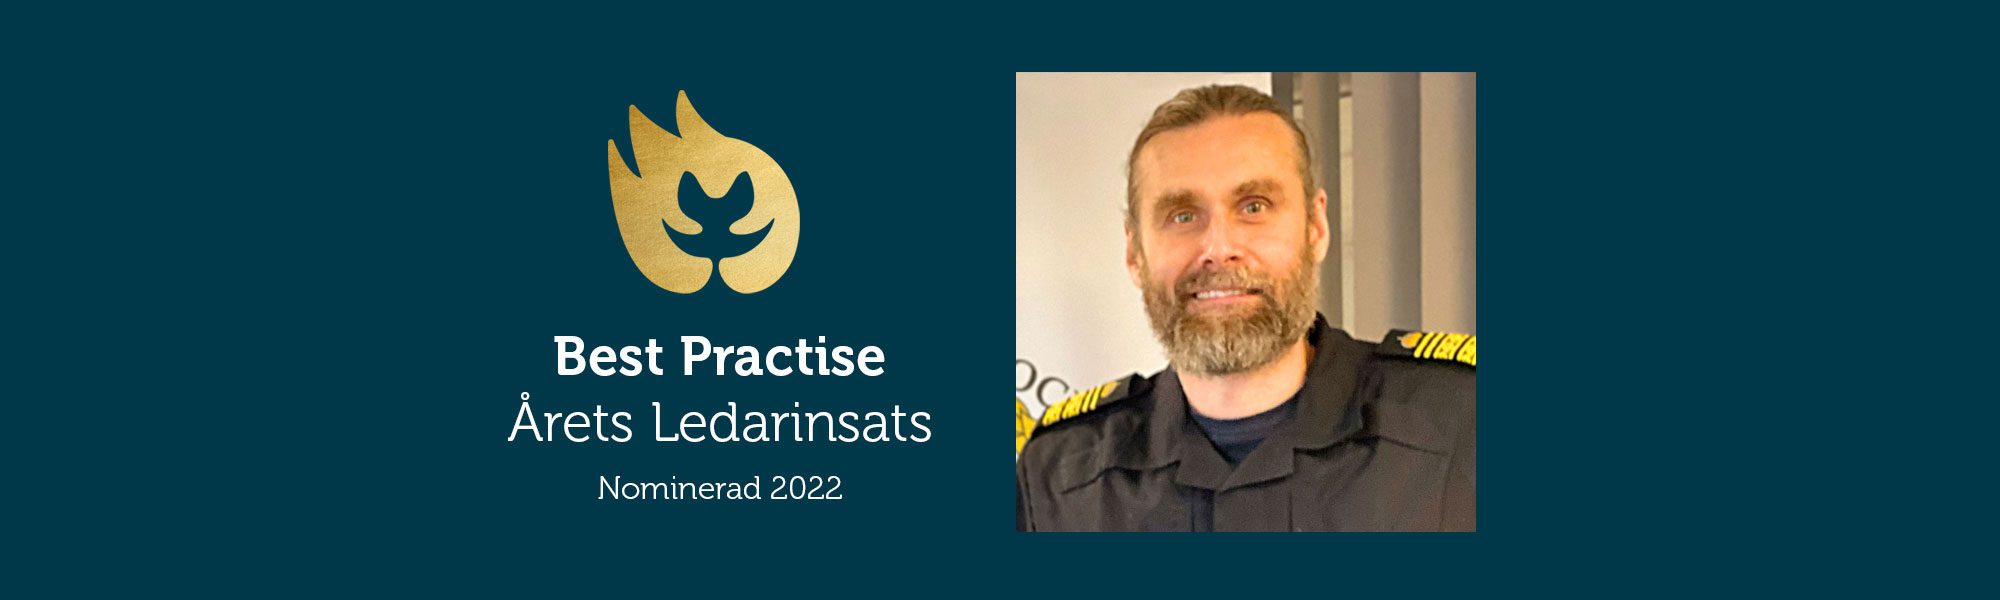 Daniel Podkanski nominerade till priset Best Practise Årets Ledarinsats 2022